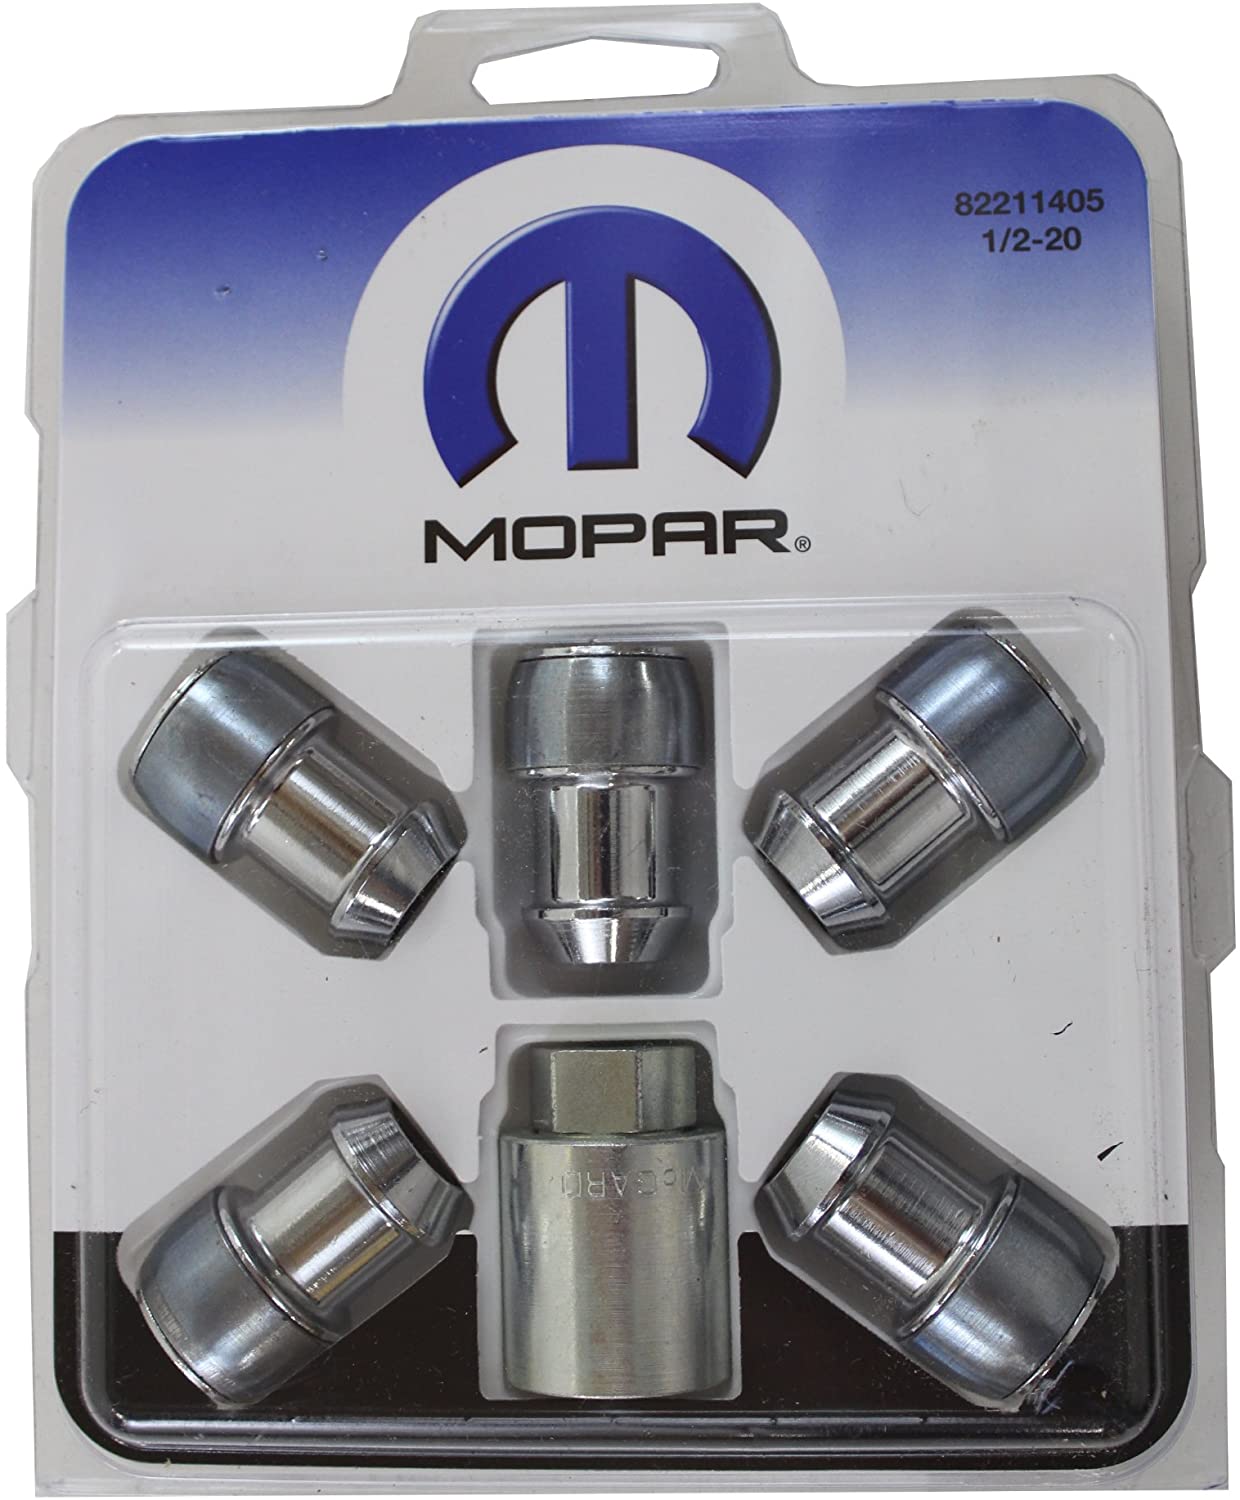 82211405 Mopar Factory Wheel Lock Kit - Parkers Chrysler Wheel Locks